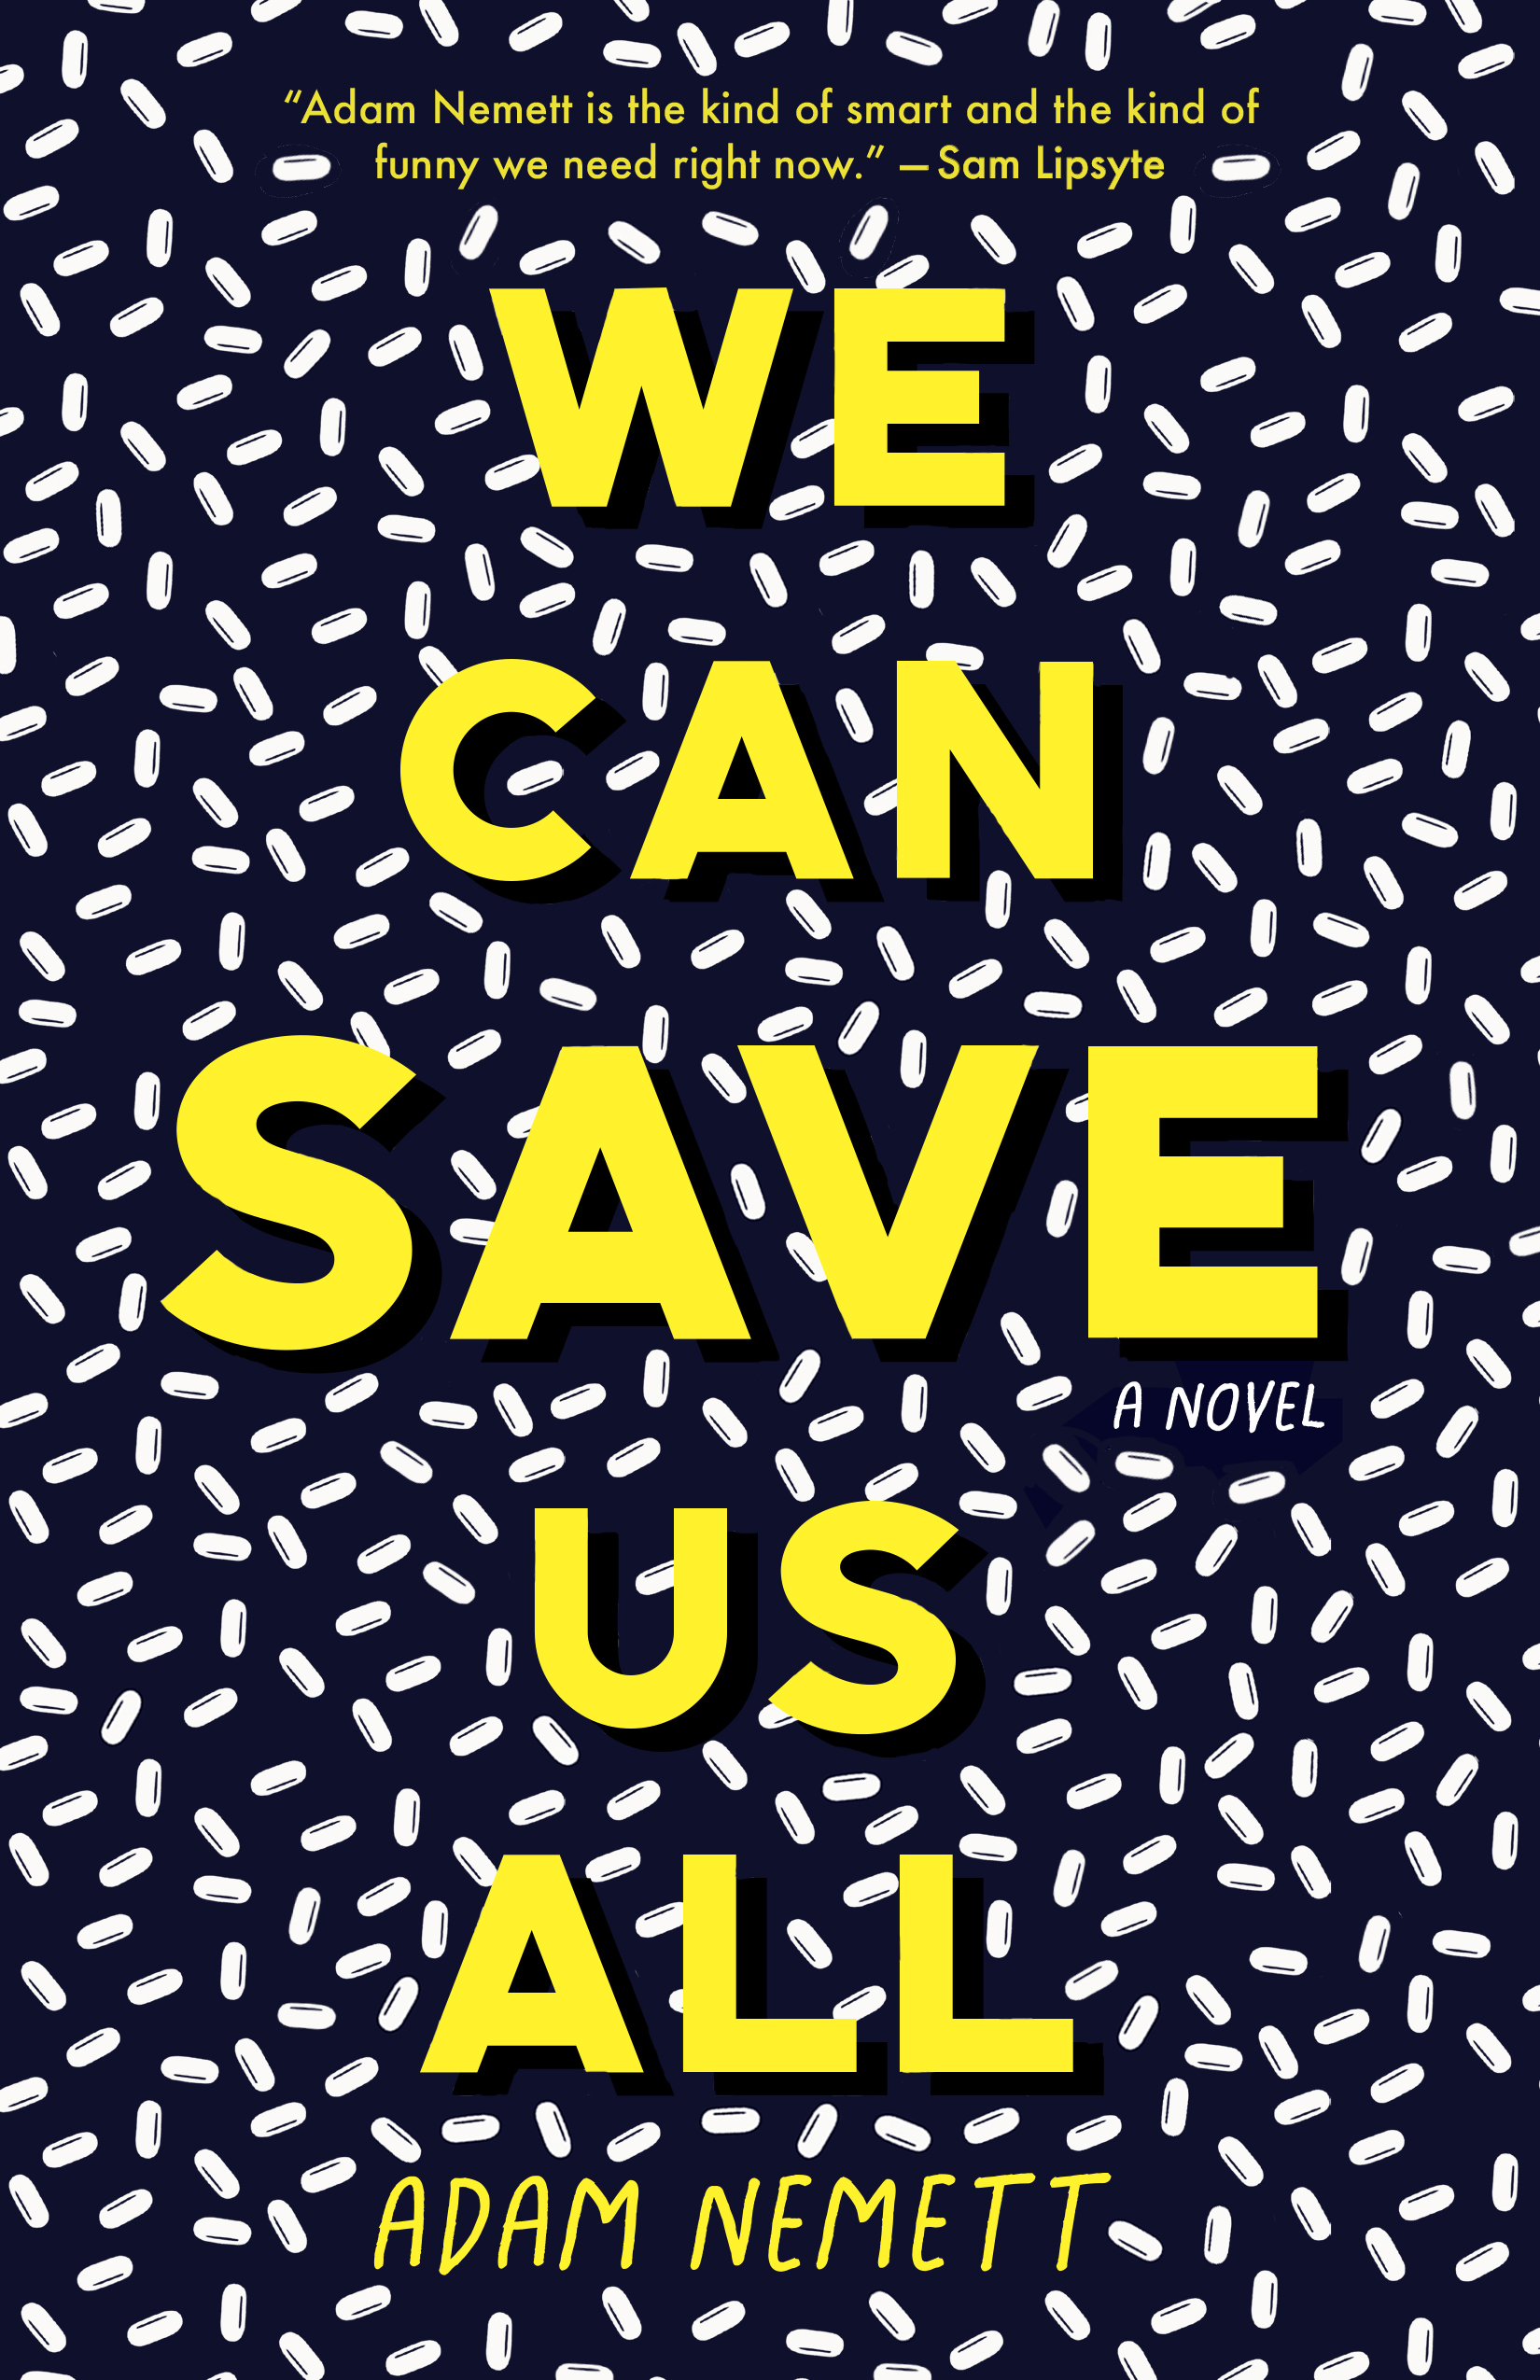 Save us книга. Save us Автор. All we can save книга. Save us перевод.